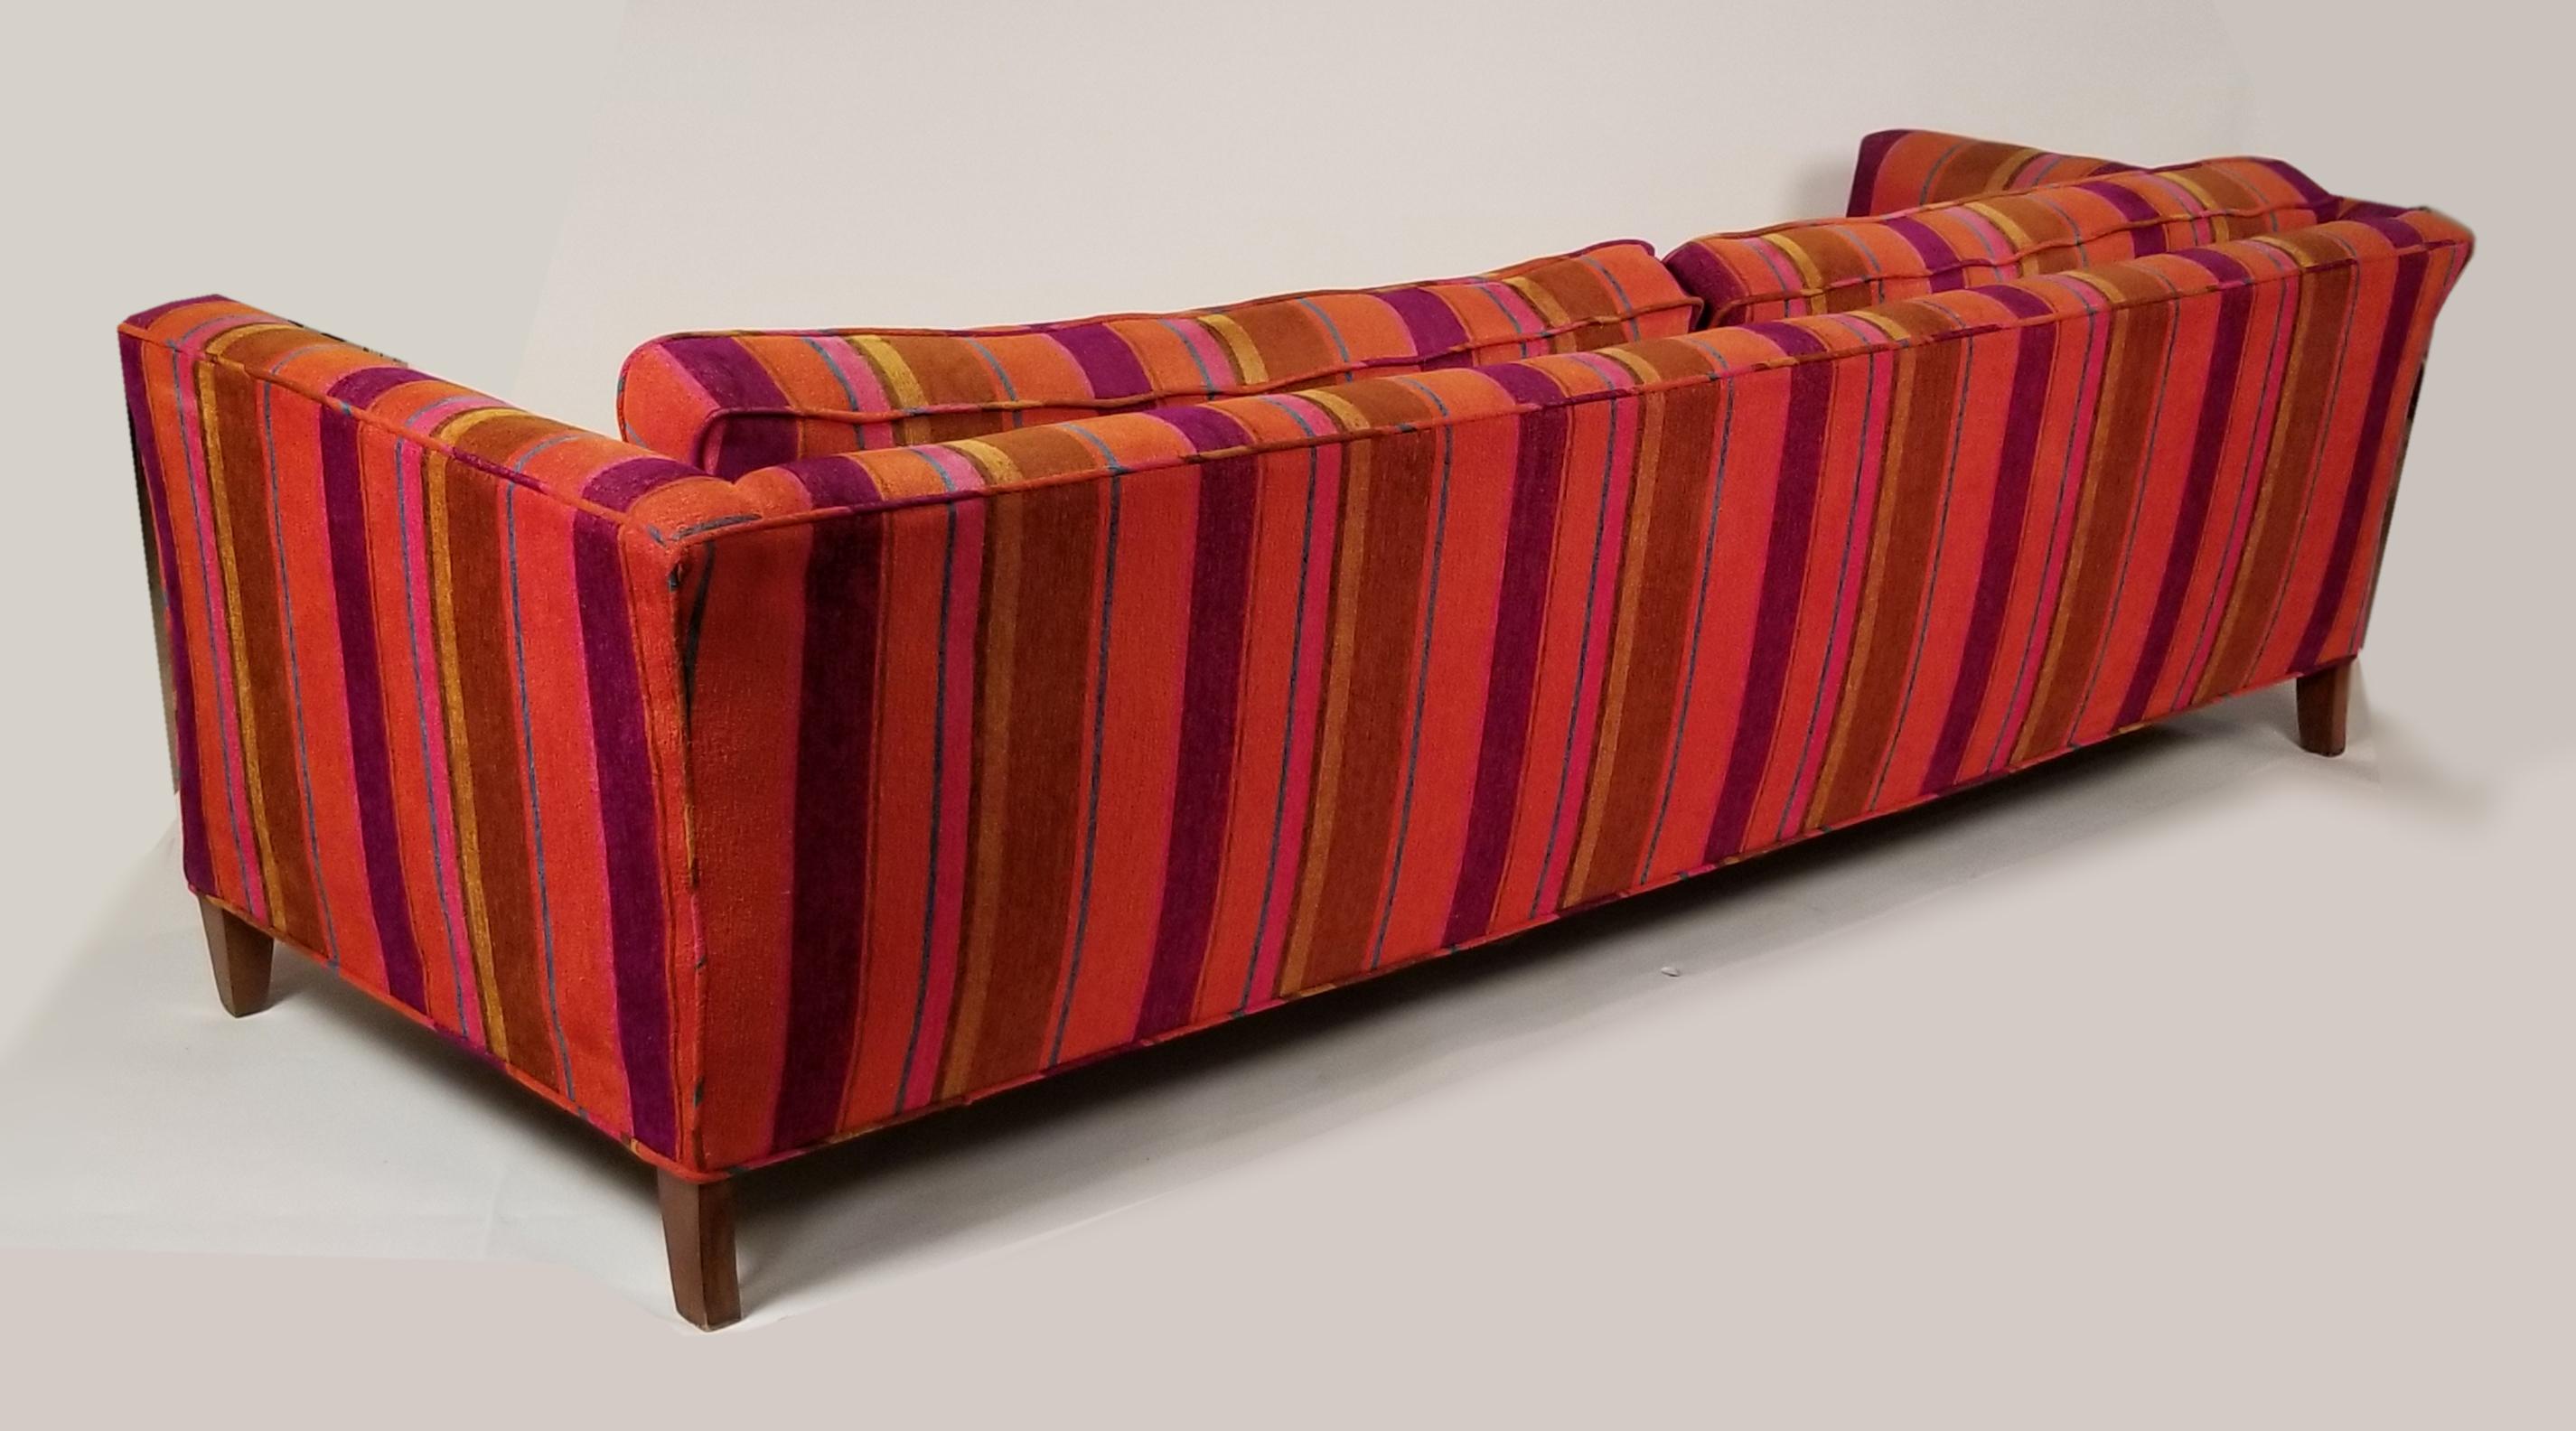 American Incredible Four-Seat Sofa by Henredon